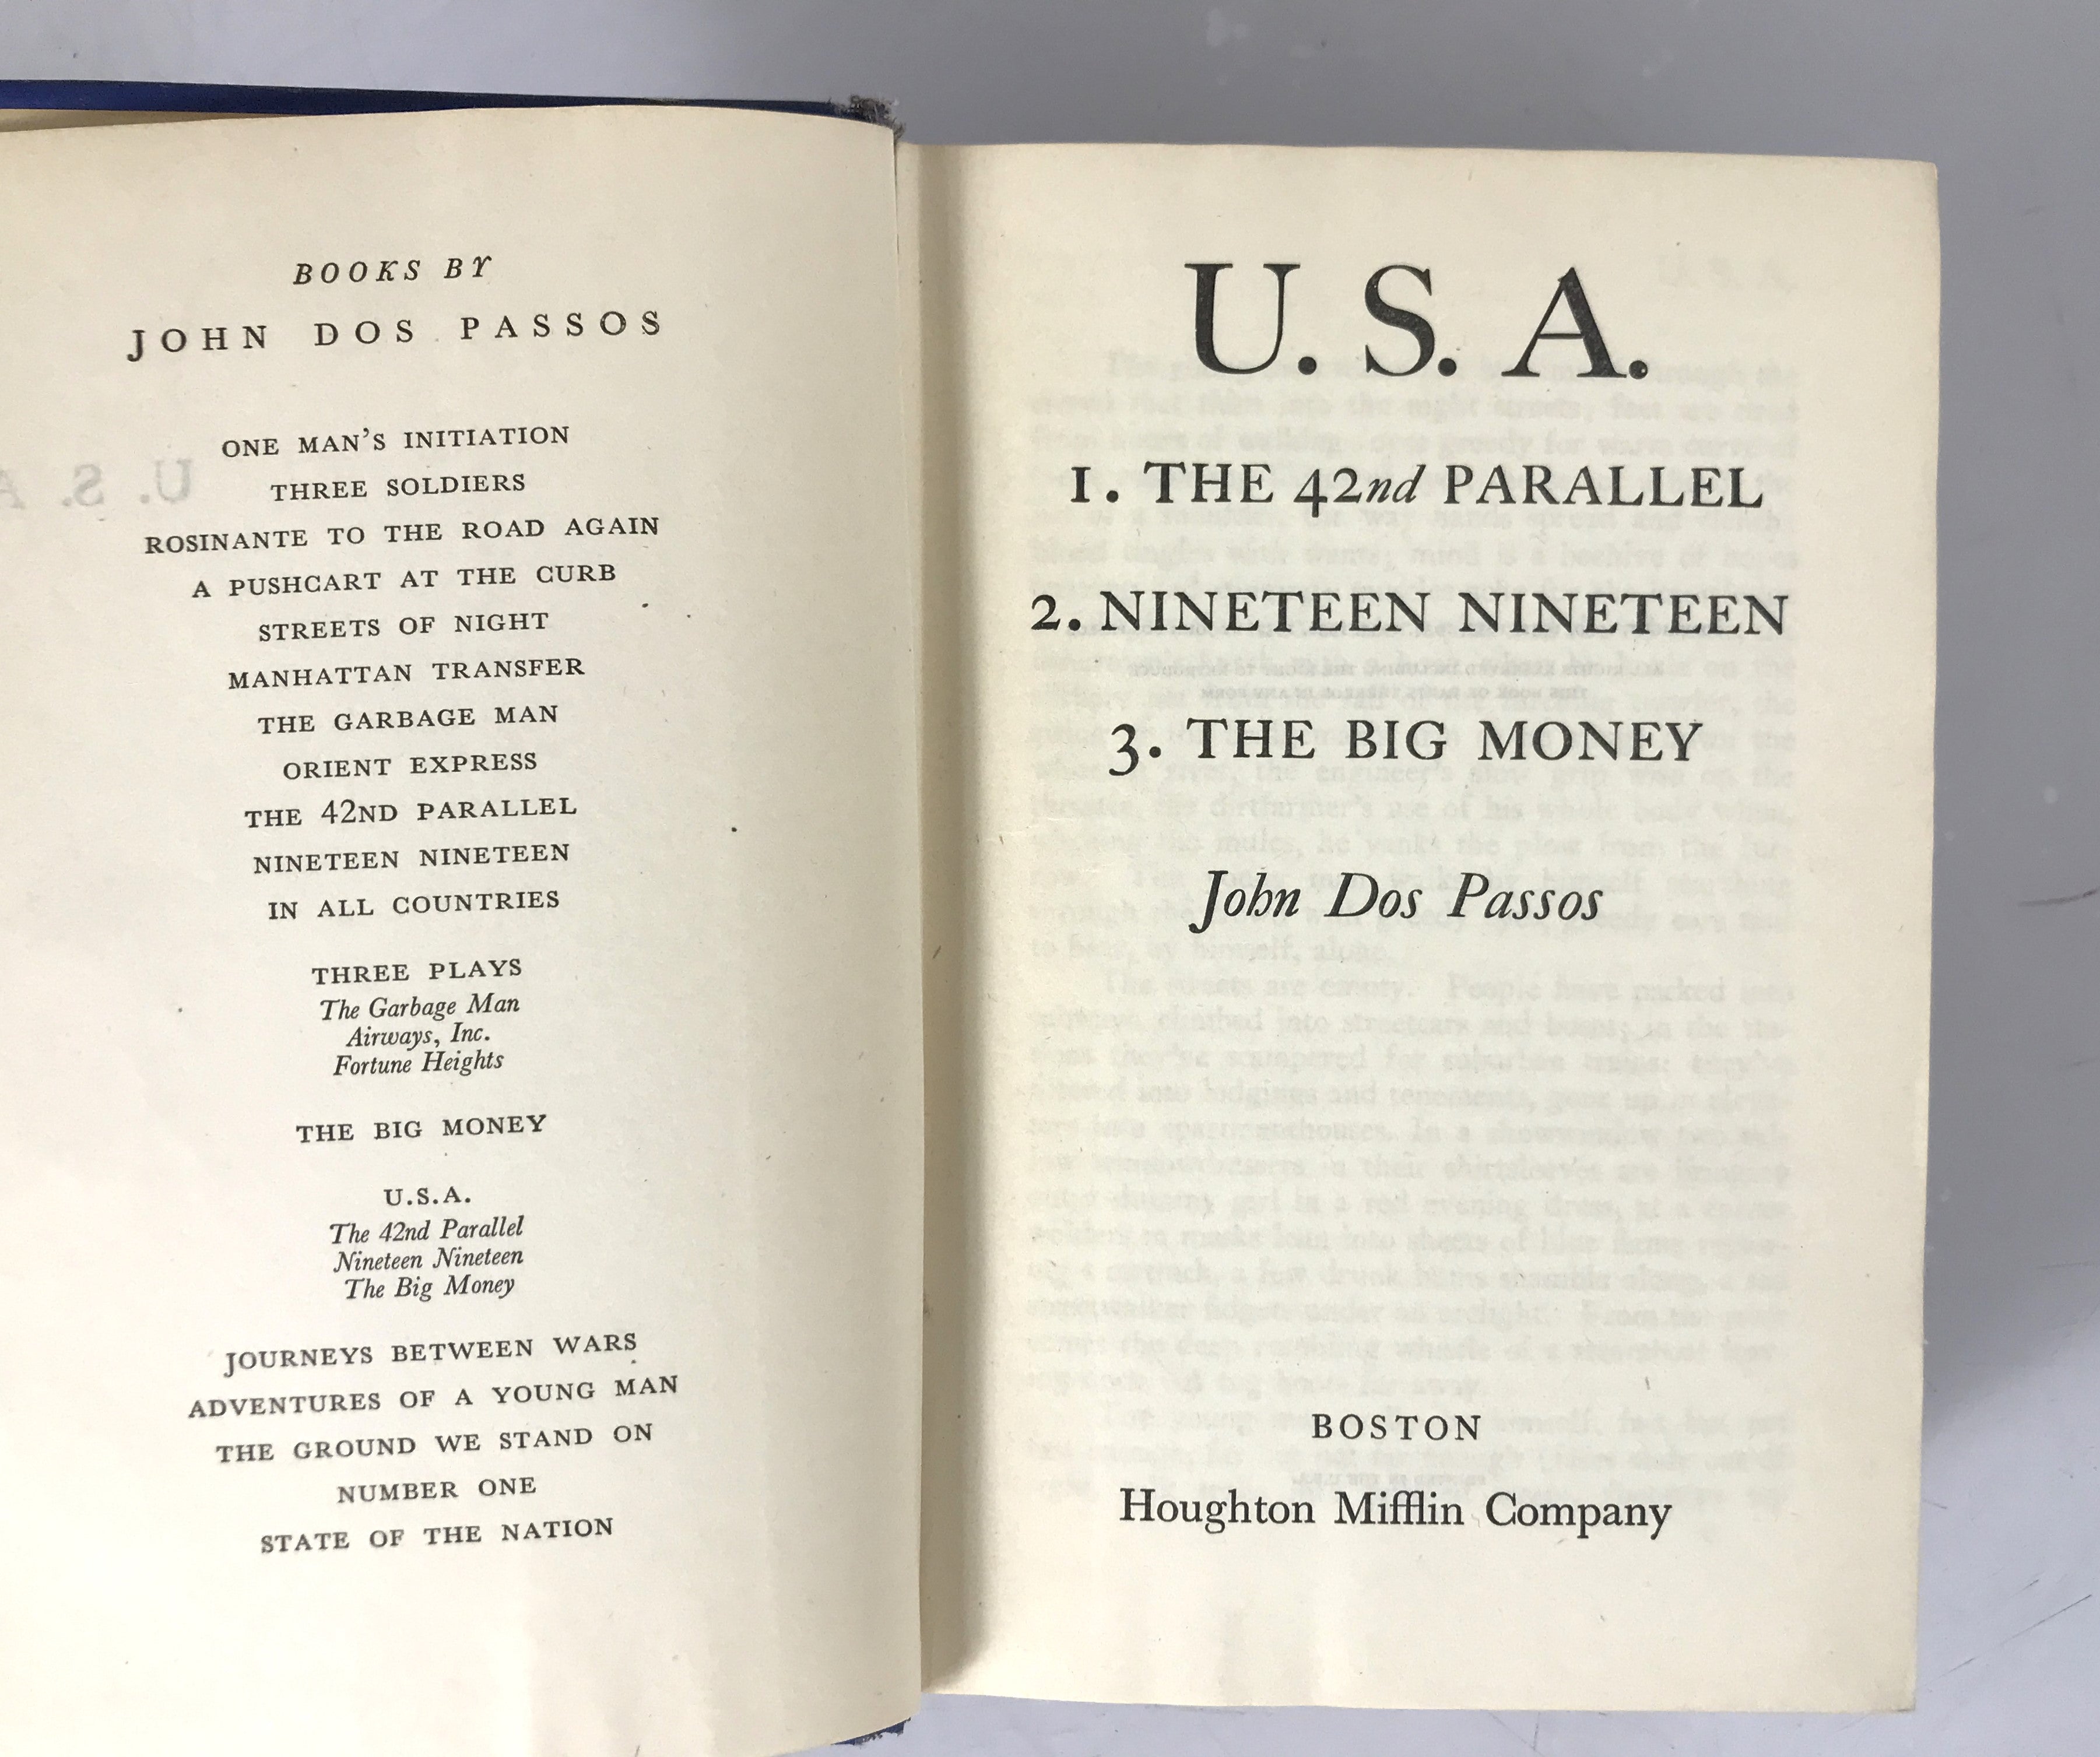 U.S.A. The 42nd Parallel, Nineteen Nineteen, and The Big Money John Dos Passos 1937 HC